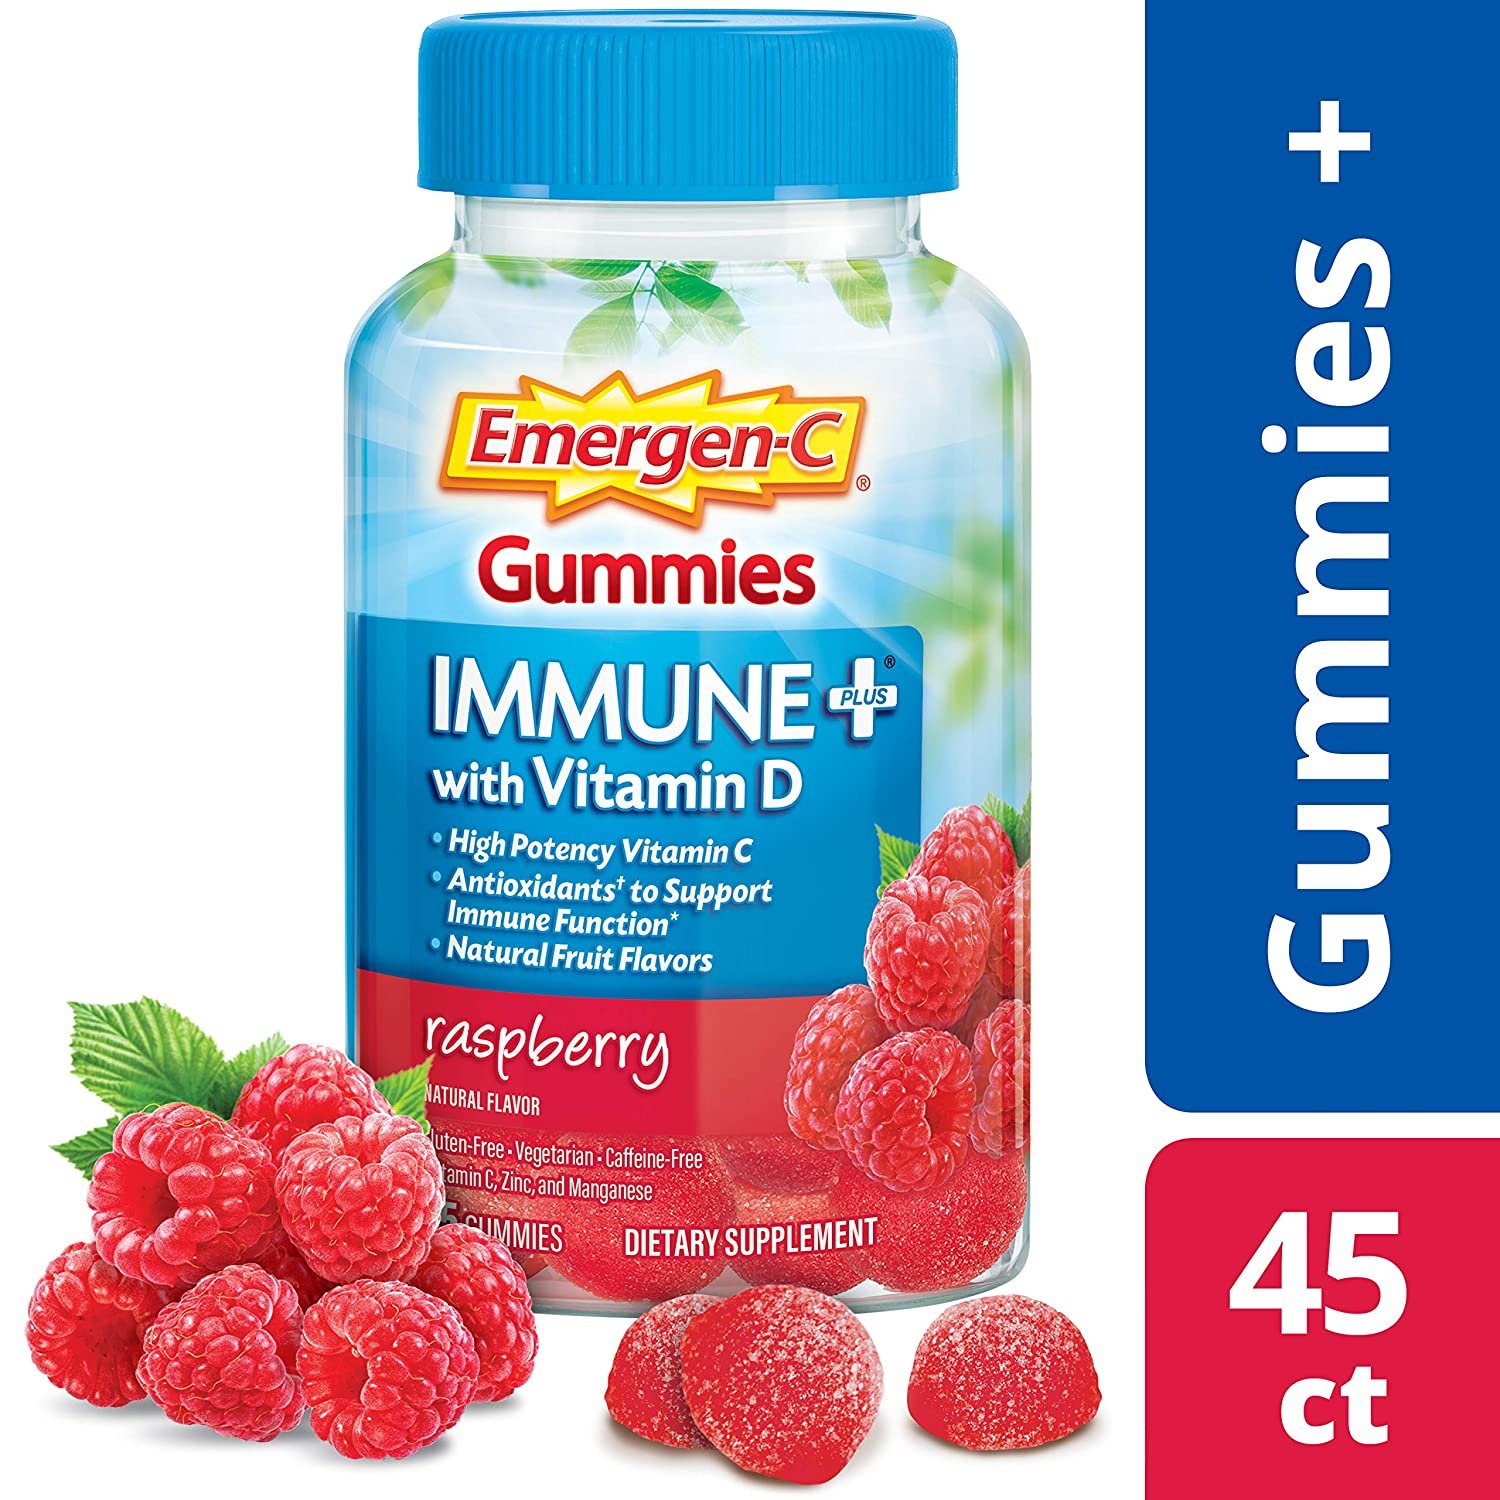 EmergenC Vitamin C Immune Plus Gummy with Vitamin D Raspberry, 45